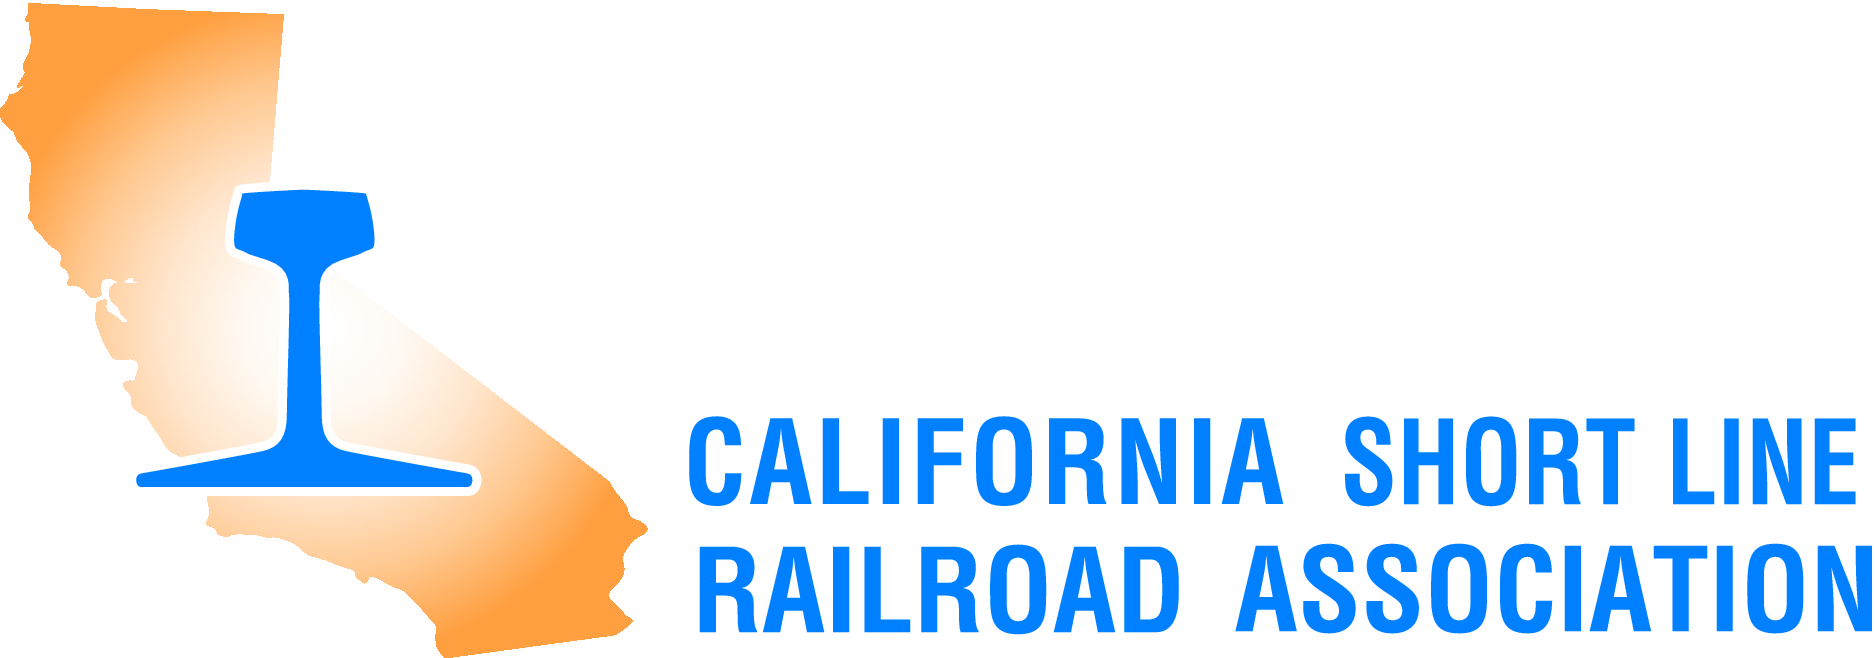 California Short Line Railroad Association